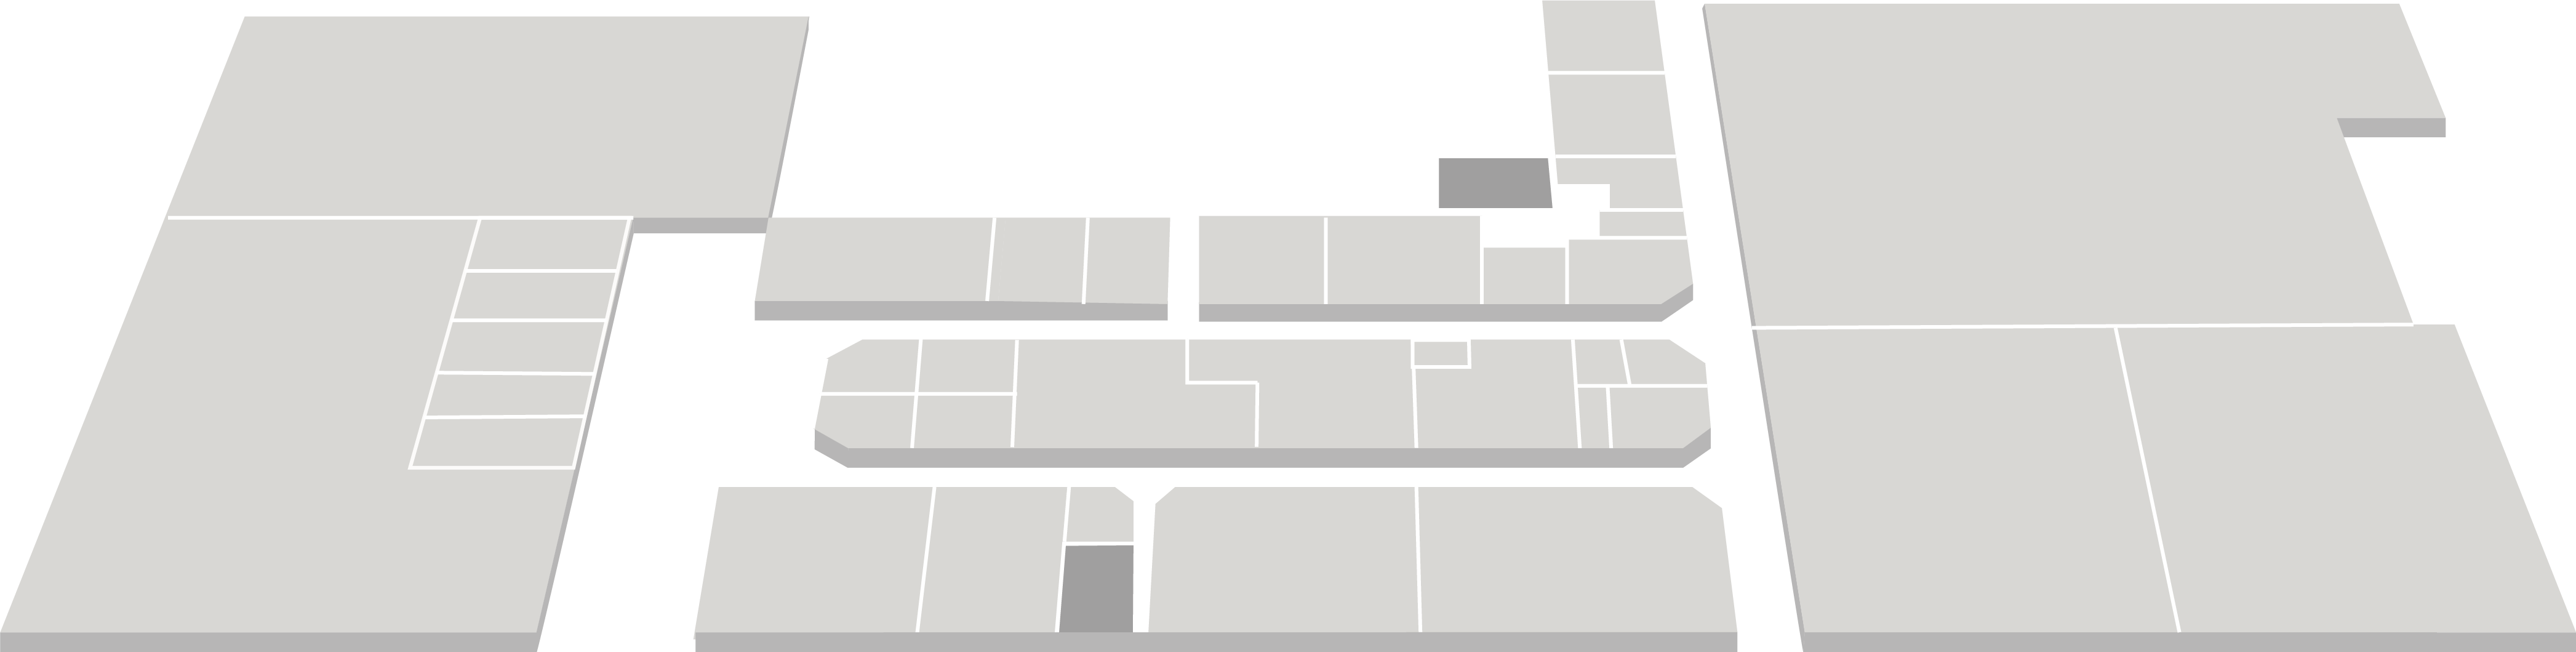 mapa almazara plaza